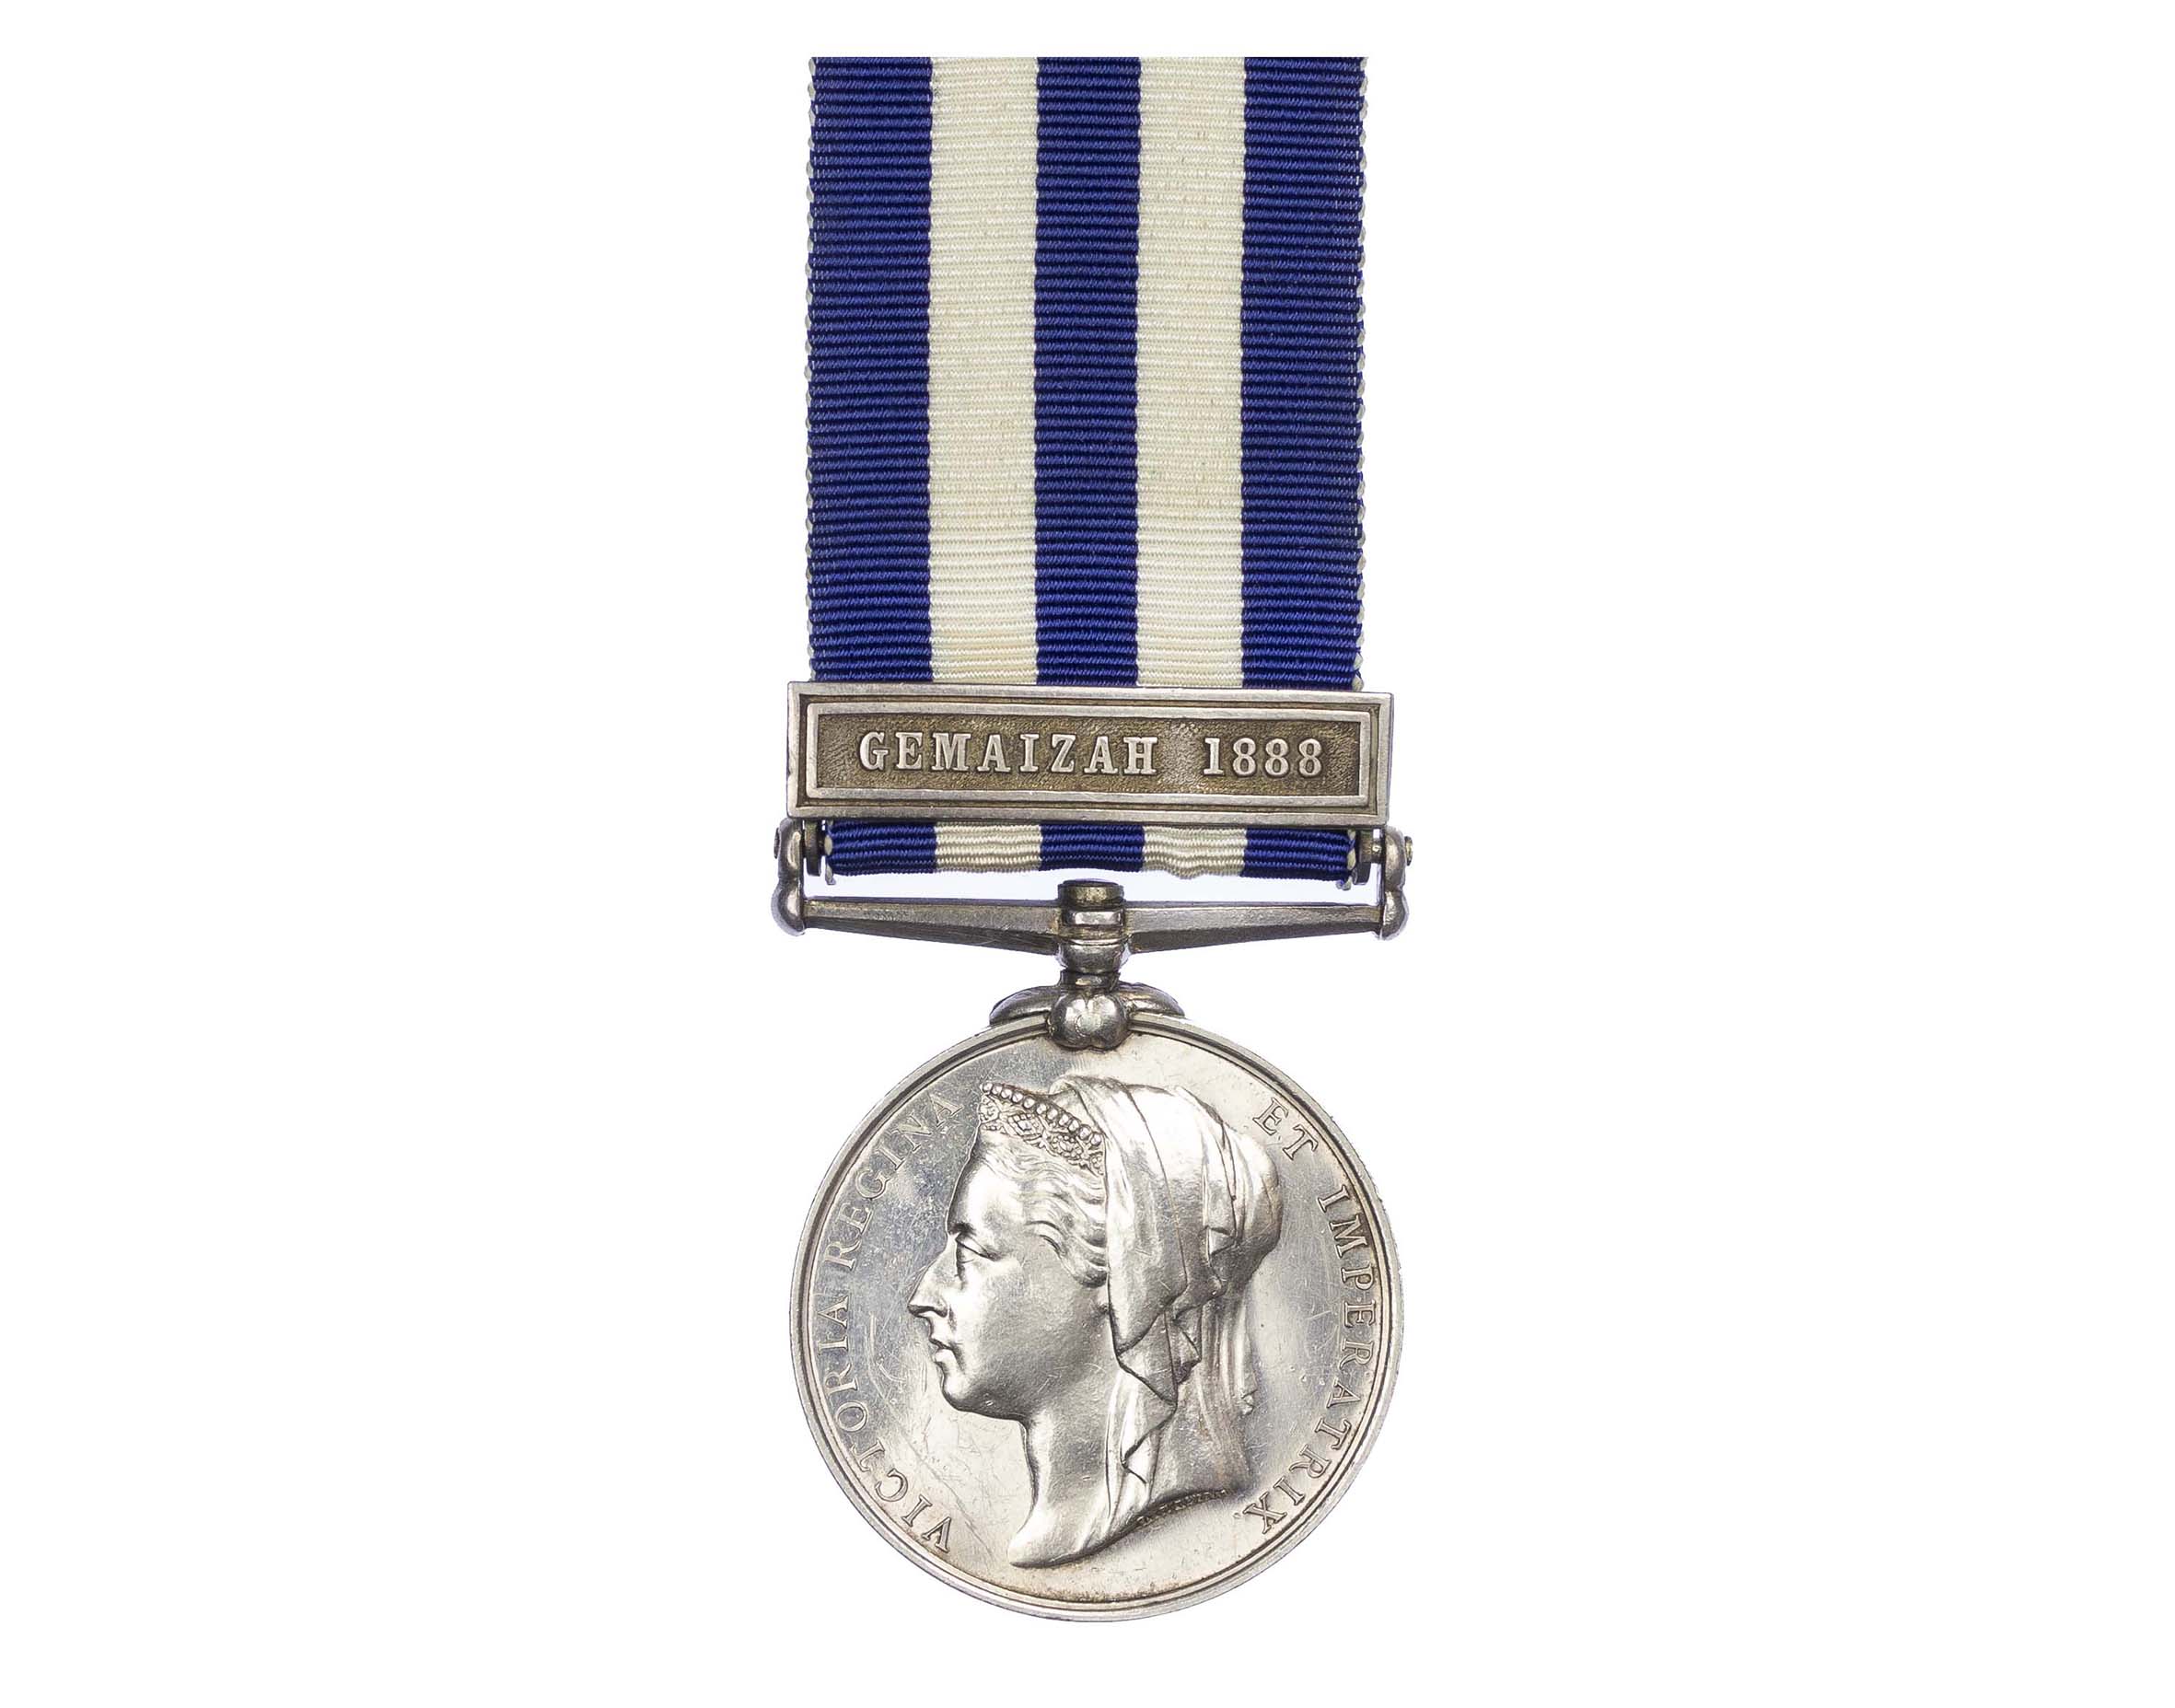 Egypt Medal 1882-89, undated reverse, one clasp, Gemaizah 1888, to Chaplain 3rd Class G. N. Godwin